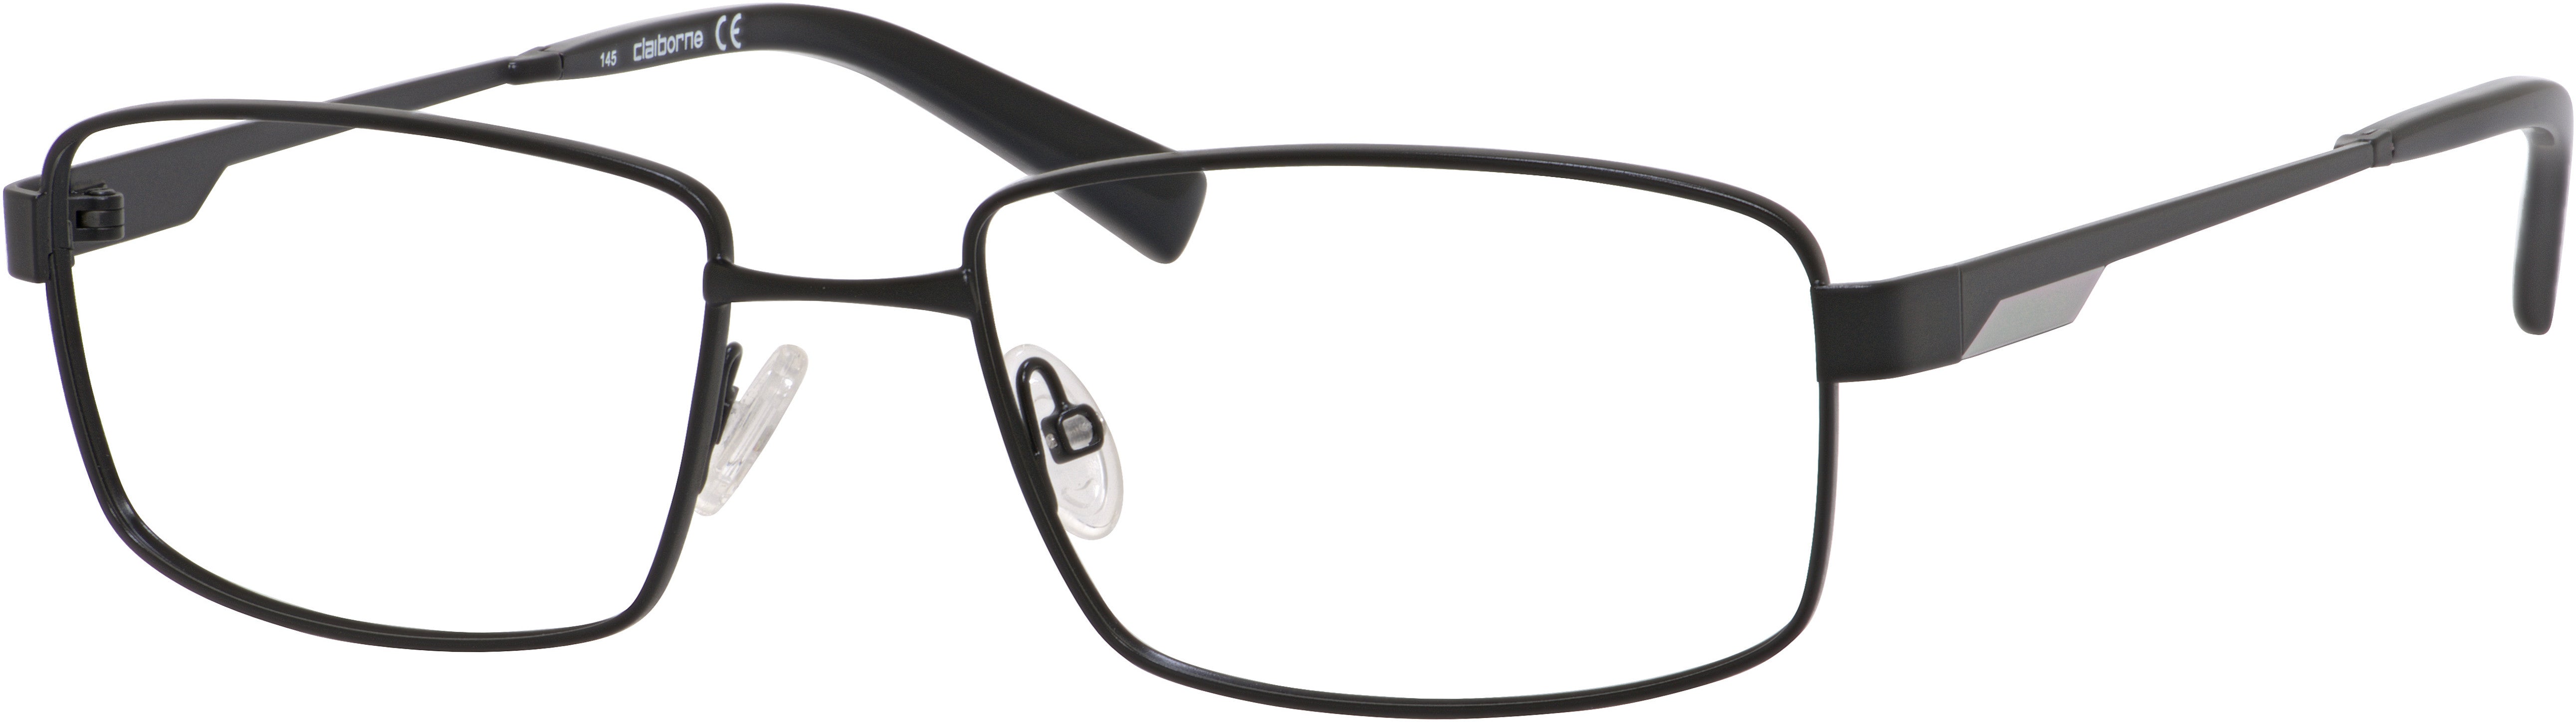  Claiborne 231XL Rectangular Eyeglasses 0003-0003  Matte Black (00 Demo Lens)